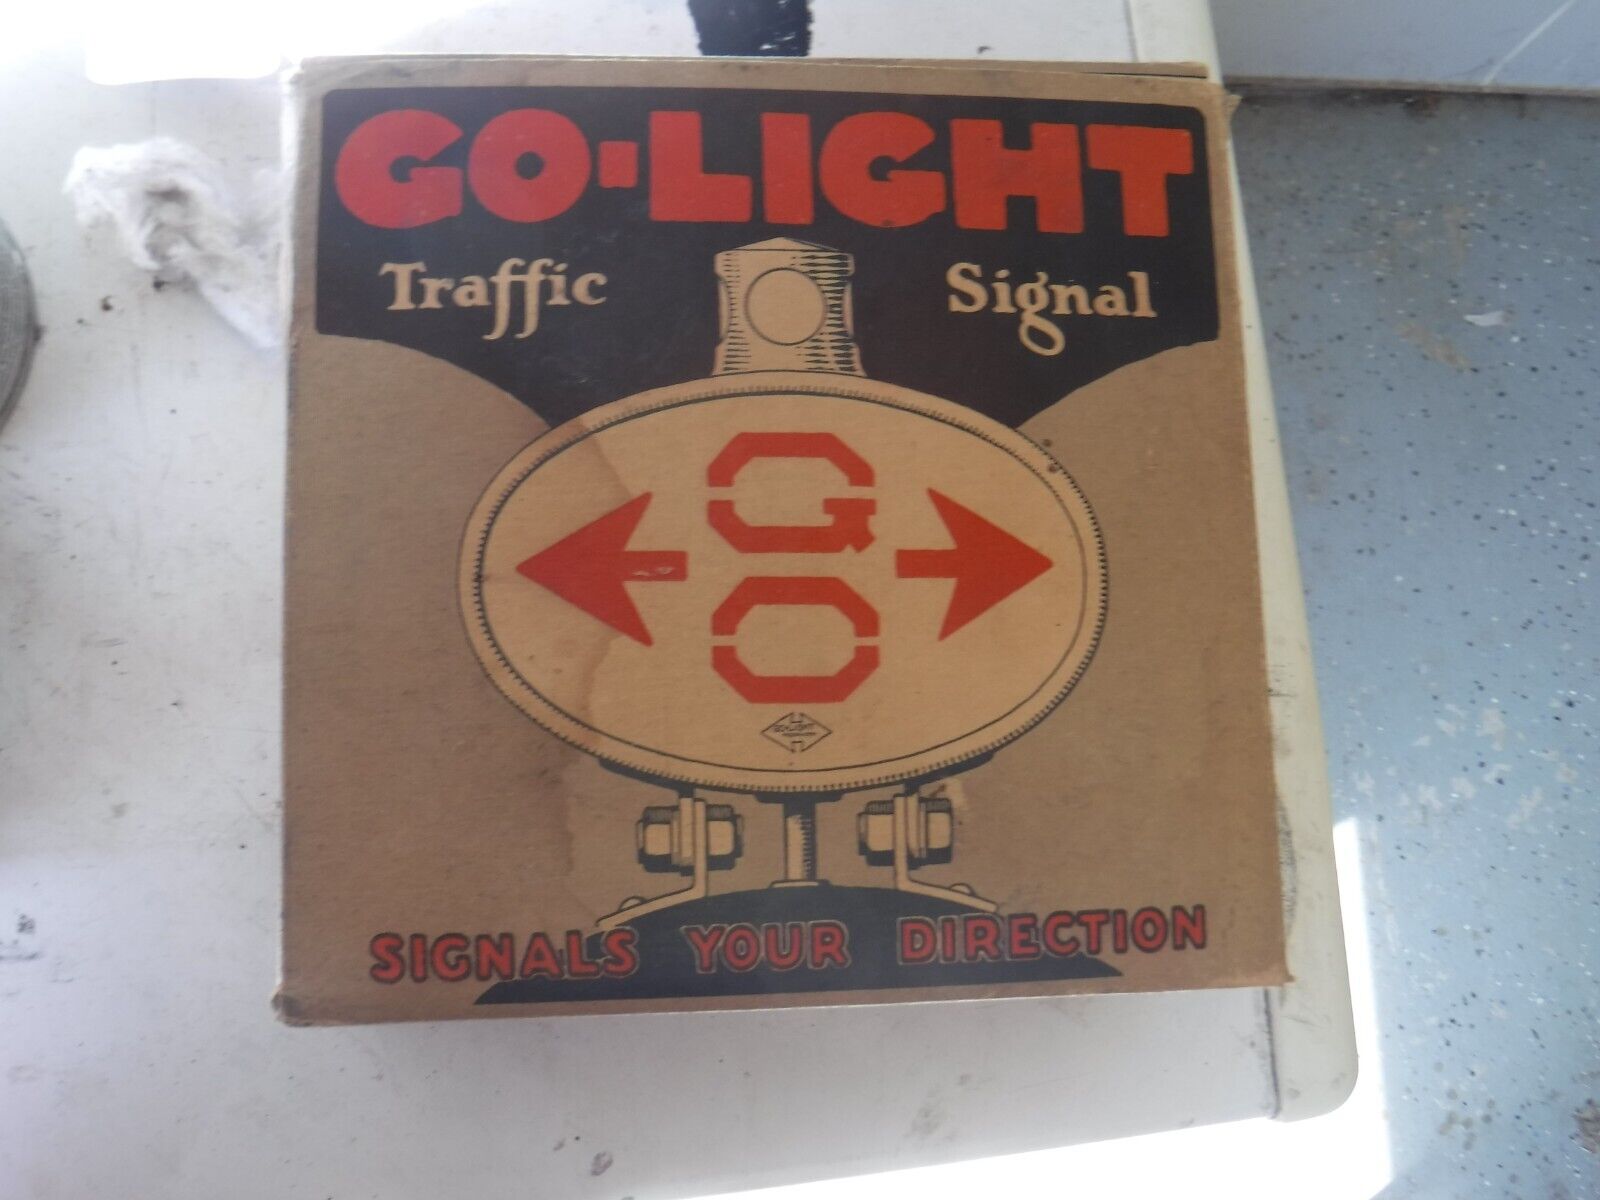 Go light golight traffic signal nos indicator brake tail light stop accessory